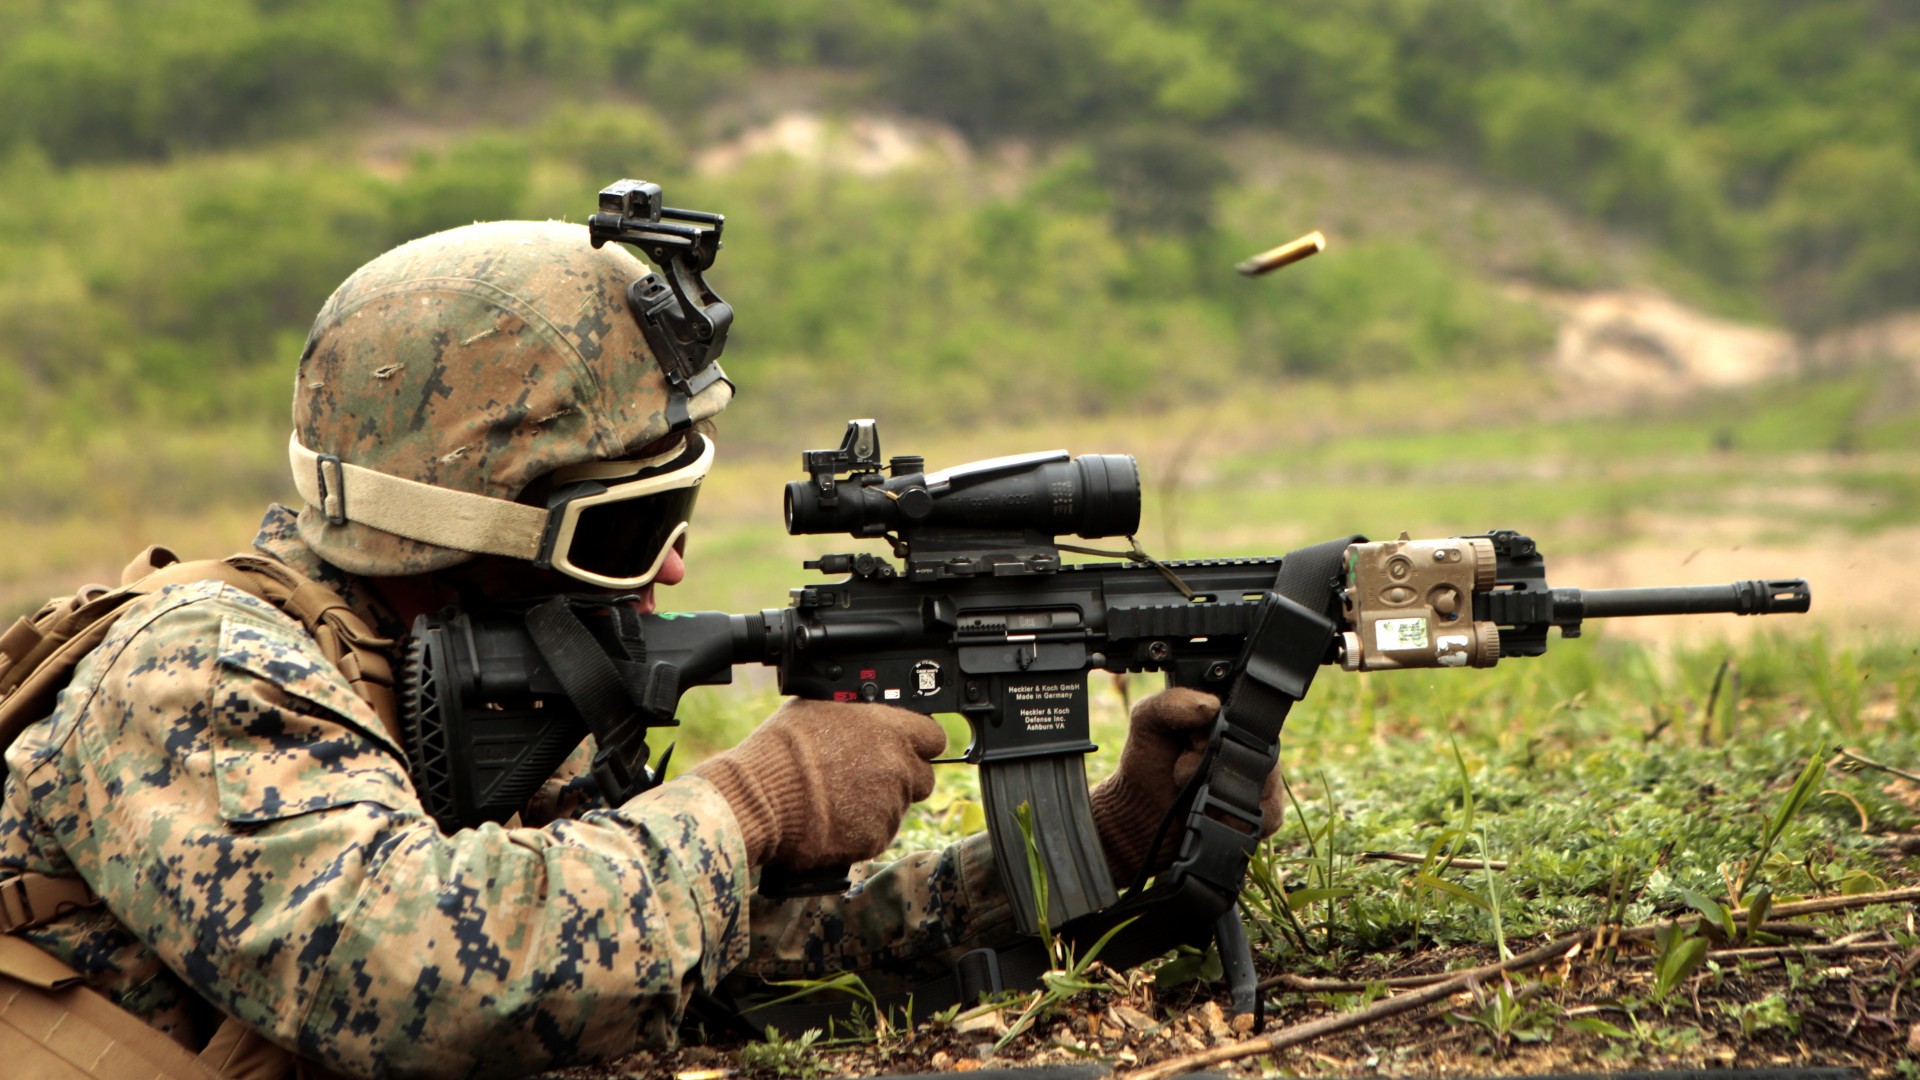 солдат, стрельба, автомат, HK416, soldier, Heckler & Koch, assault rifle, firing, camo, in action (horizontal)